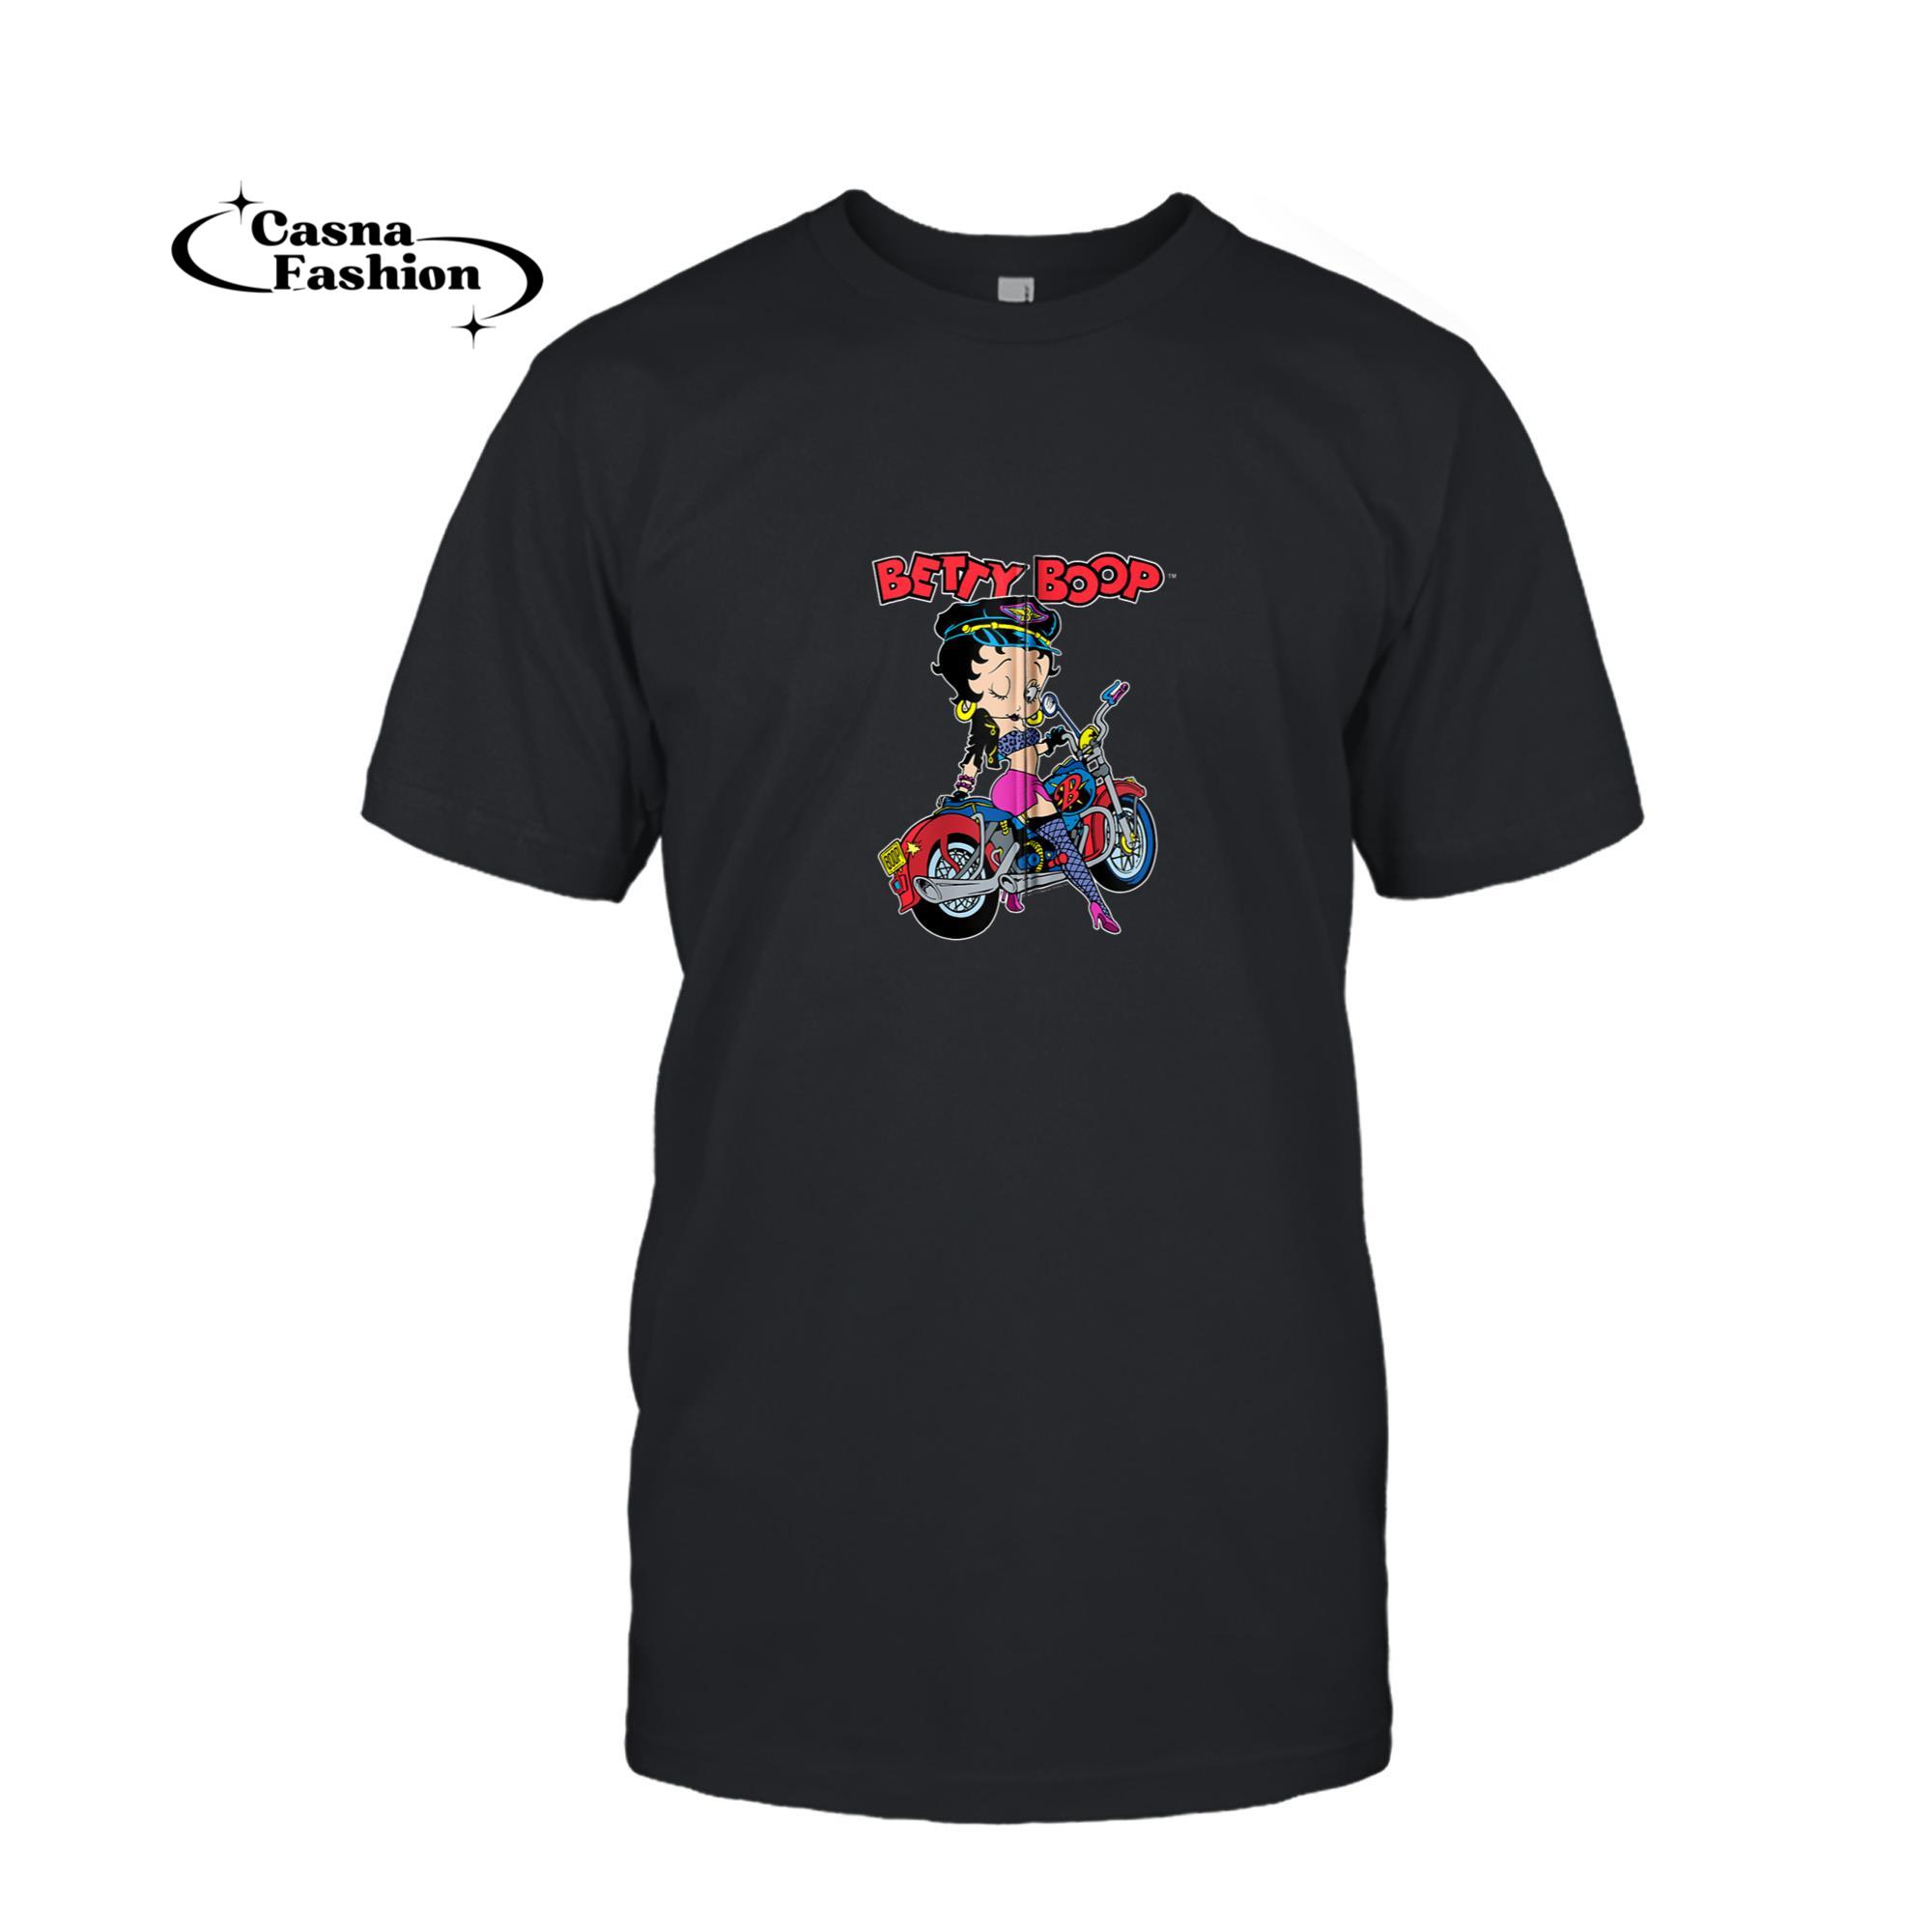 casnafashion_T-shirt_Betty Boop Biker Outfit Motorcycle Pose Zip Hoodie_T-shirt_Black